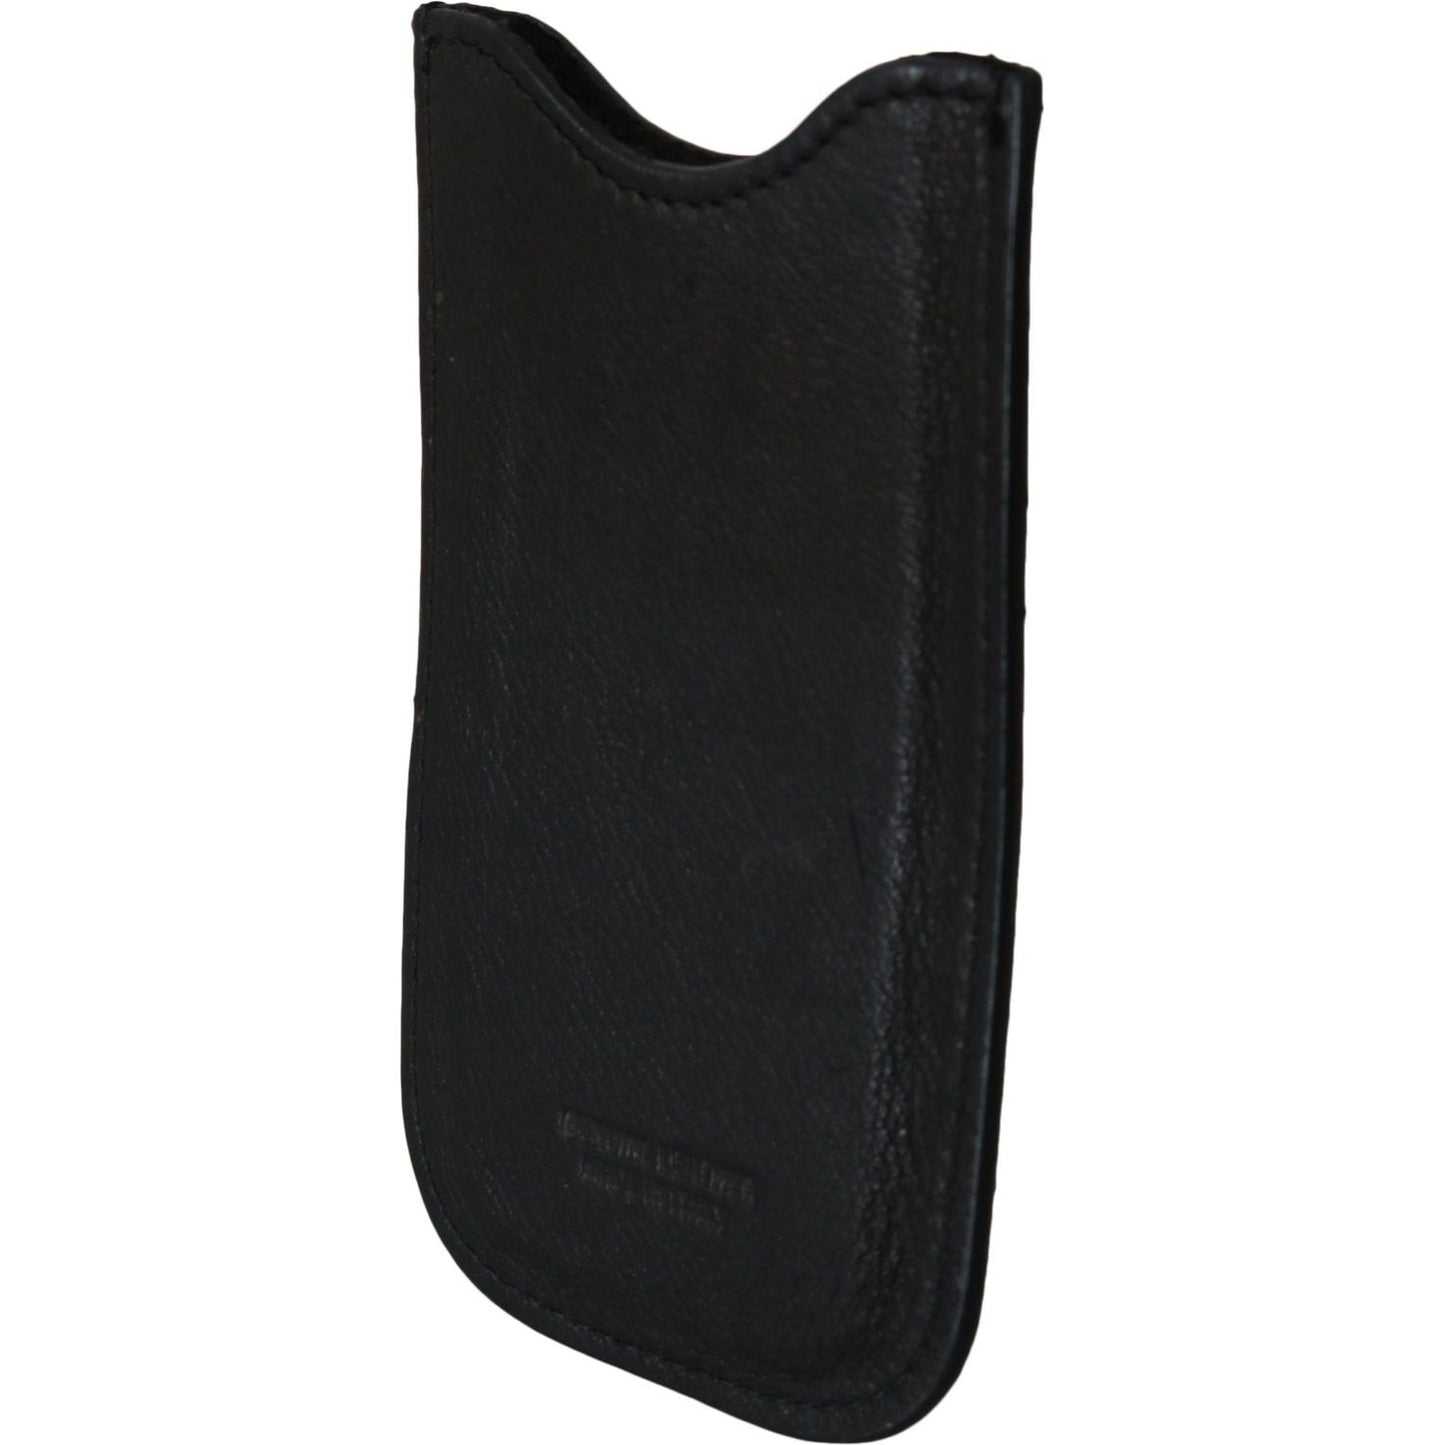 John Galliano Elegant Black Genuine Leather Men's Wallet black-leather-multifunctional-men-id-bill-card-holder-wallet Wallet